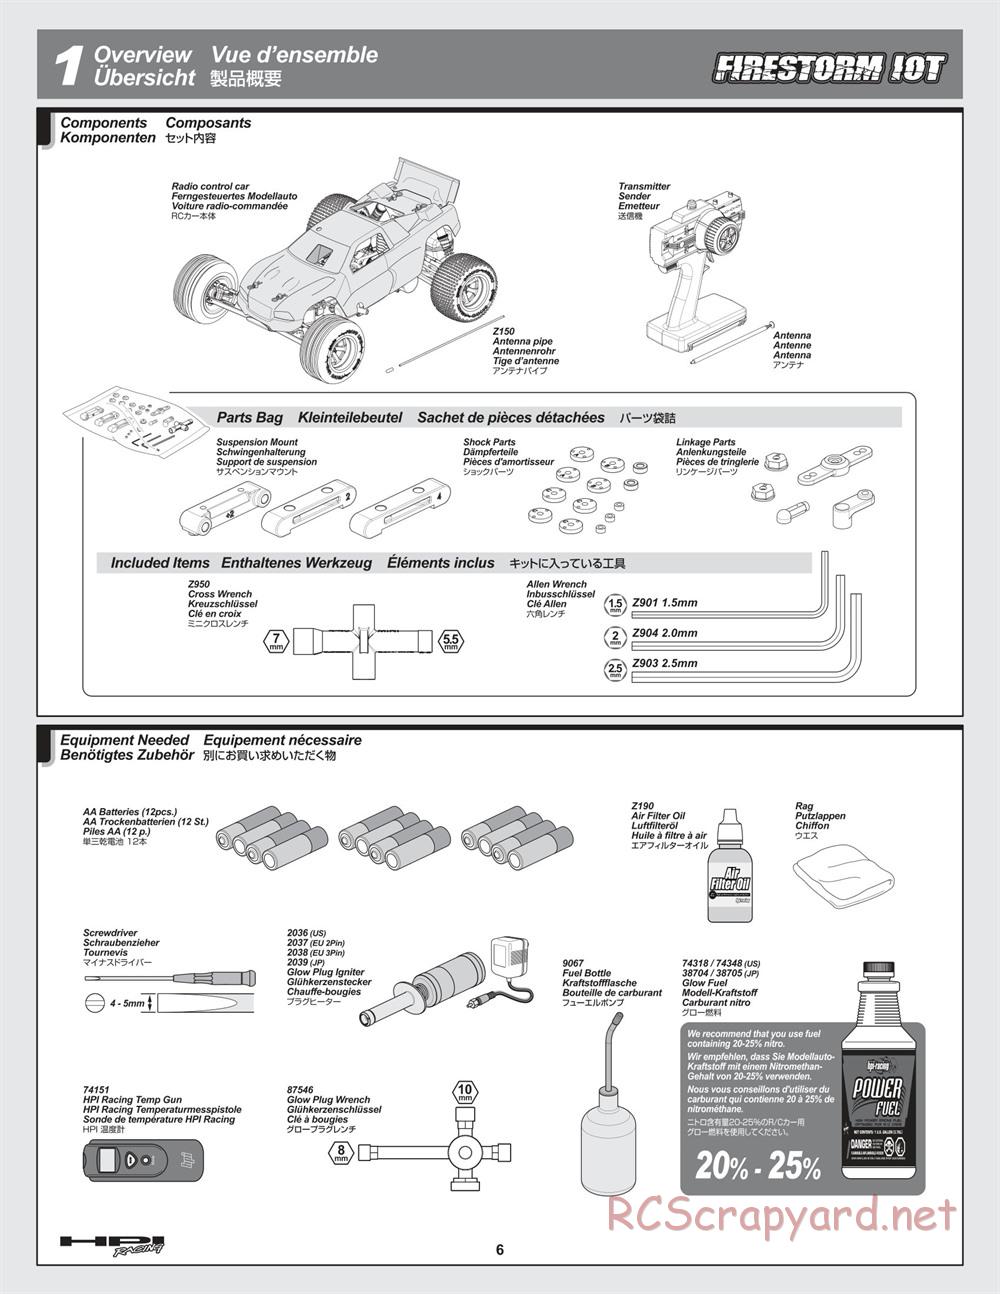 HPI - Firestorm 10T - Manual - Page 6